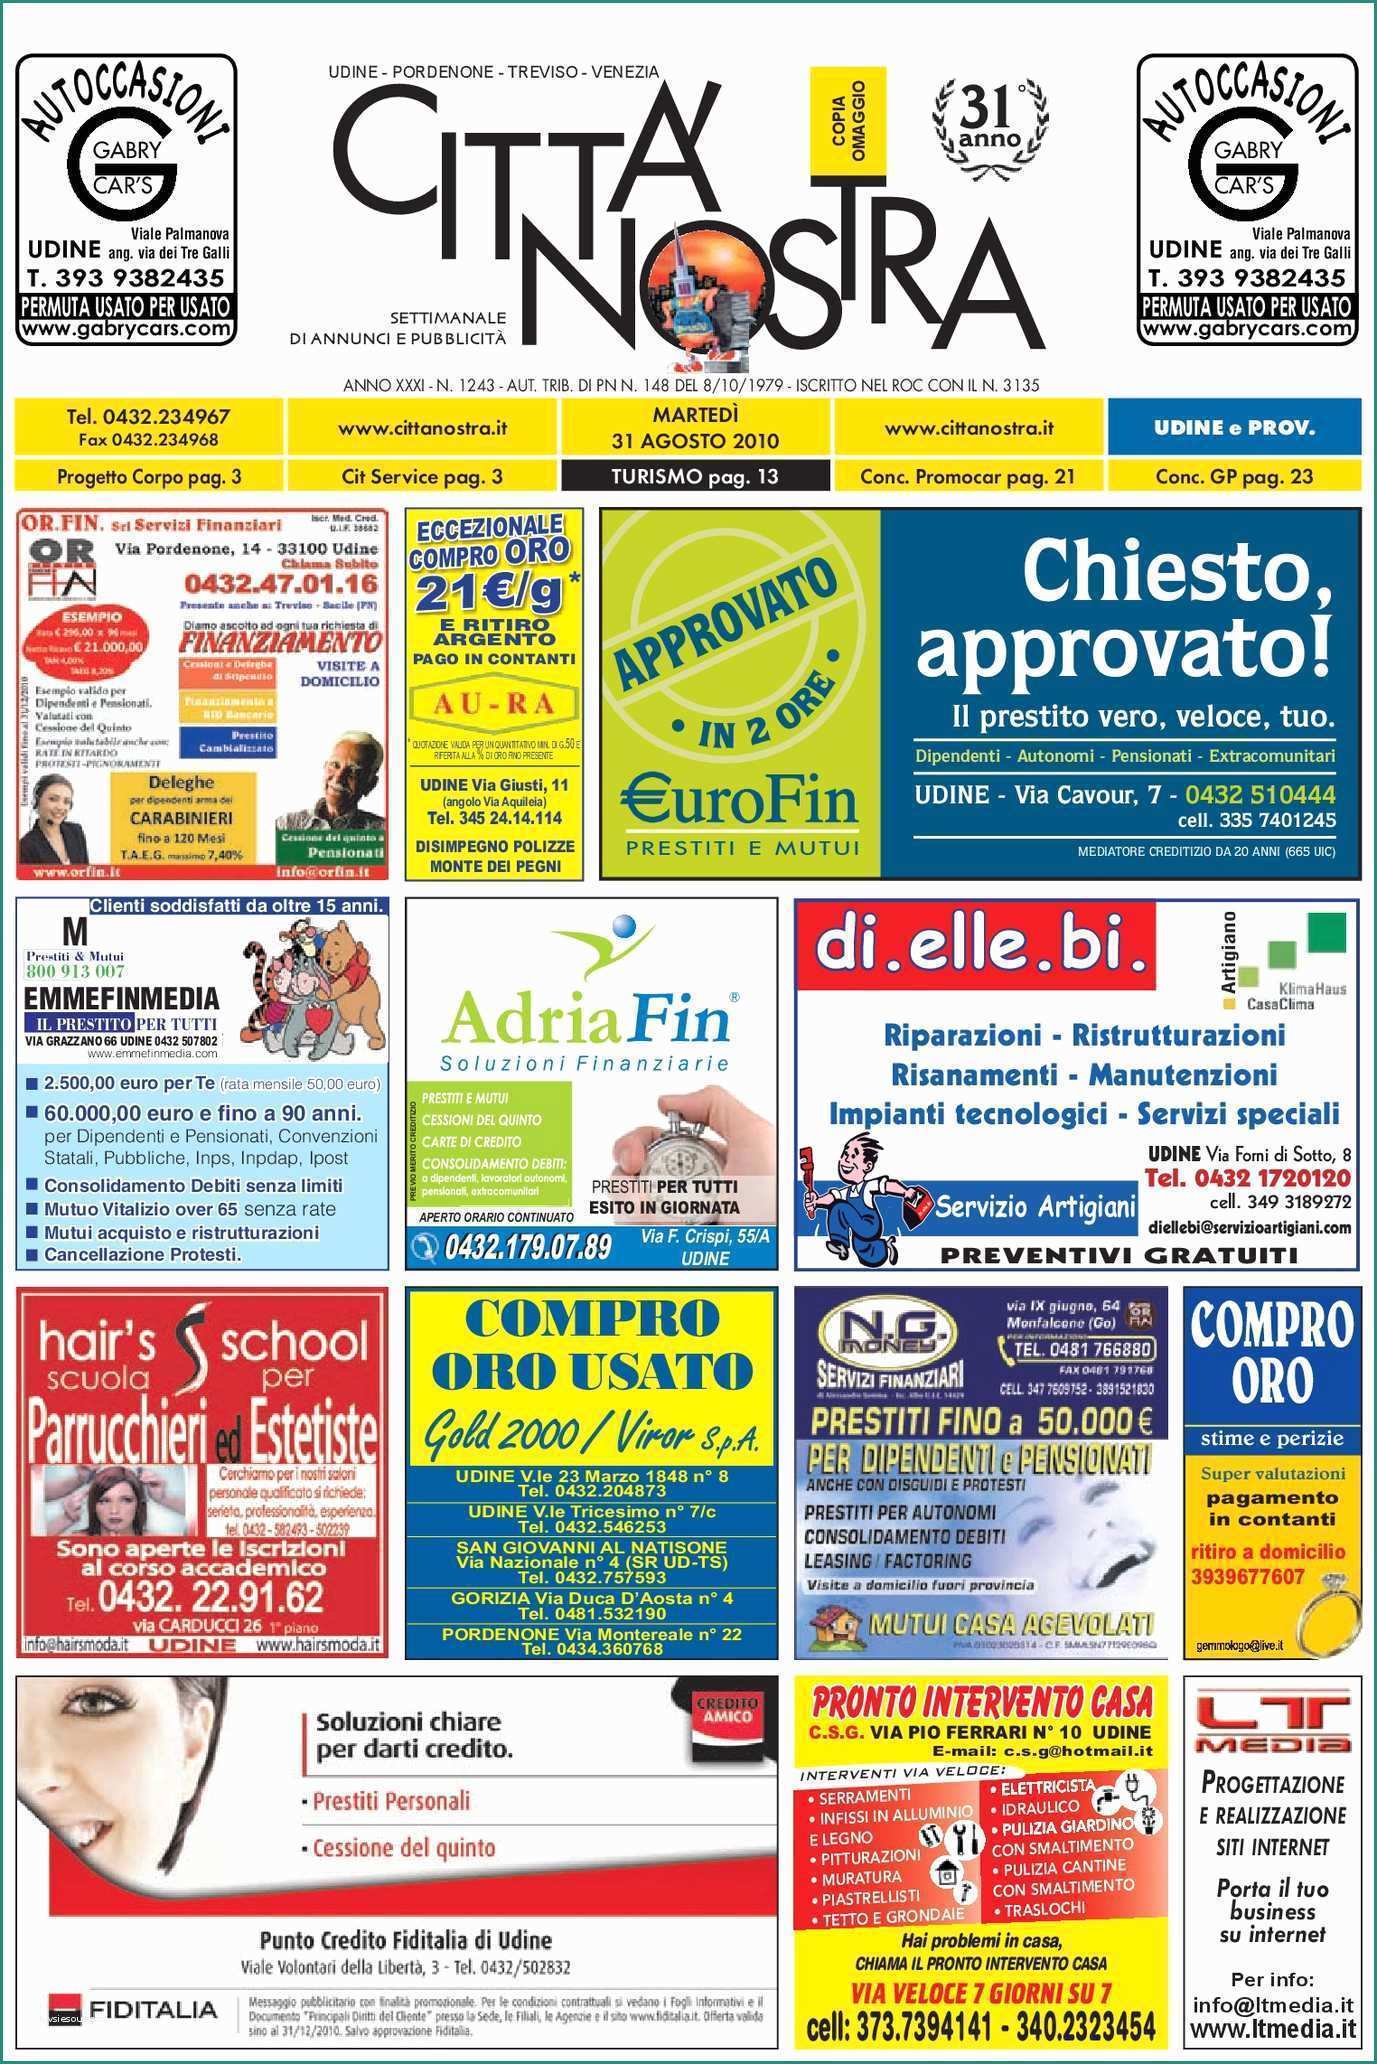 Divano Posti E Calaméo Citt  Nostra Udine Del 31 08 2010 N 1243